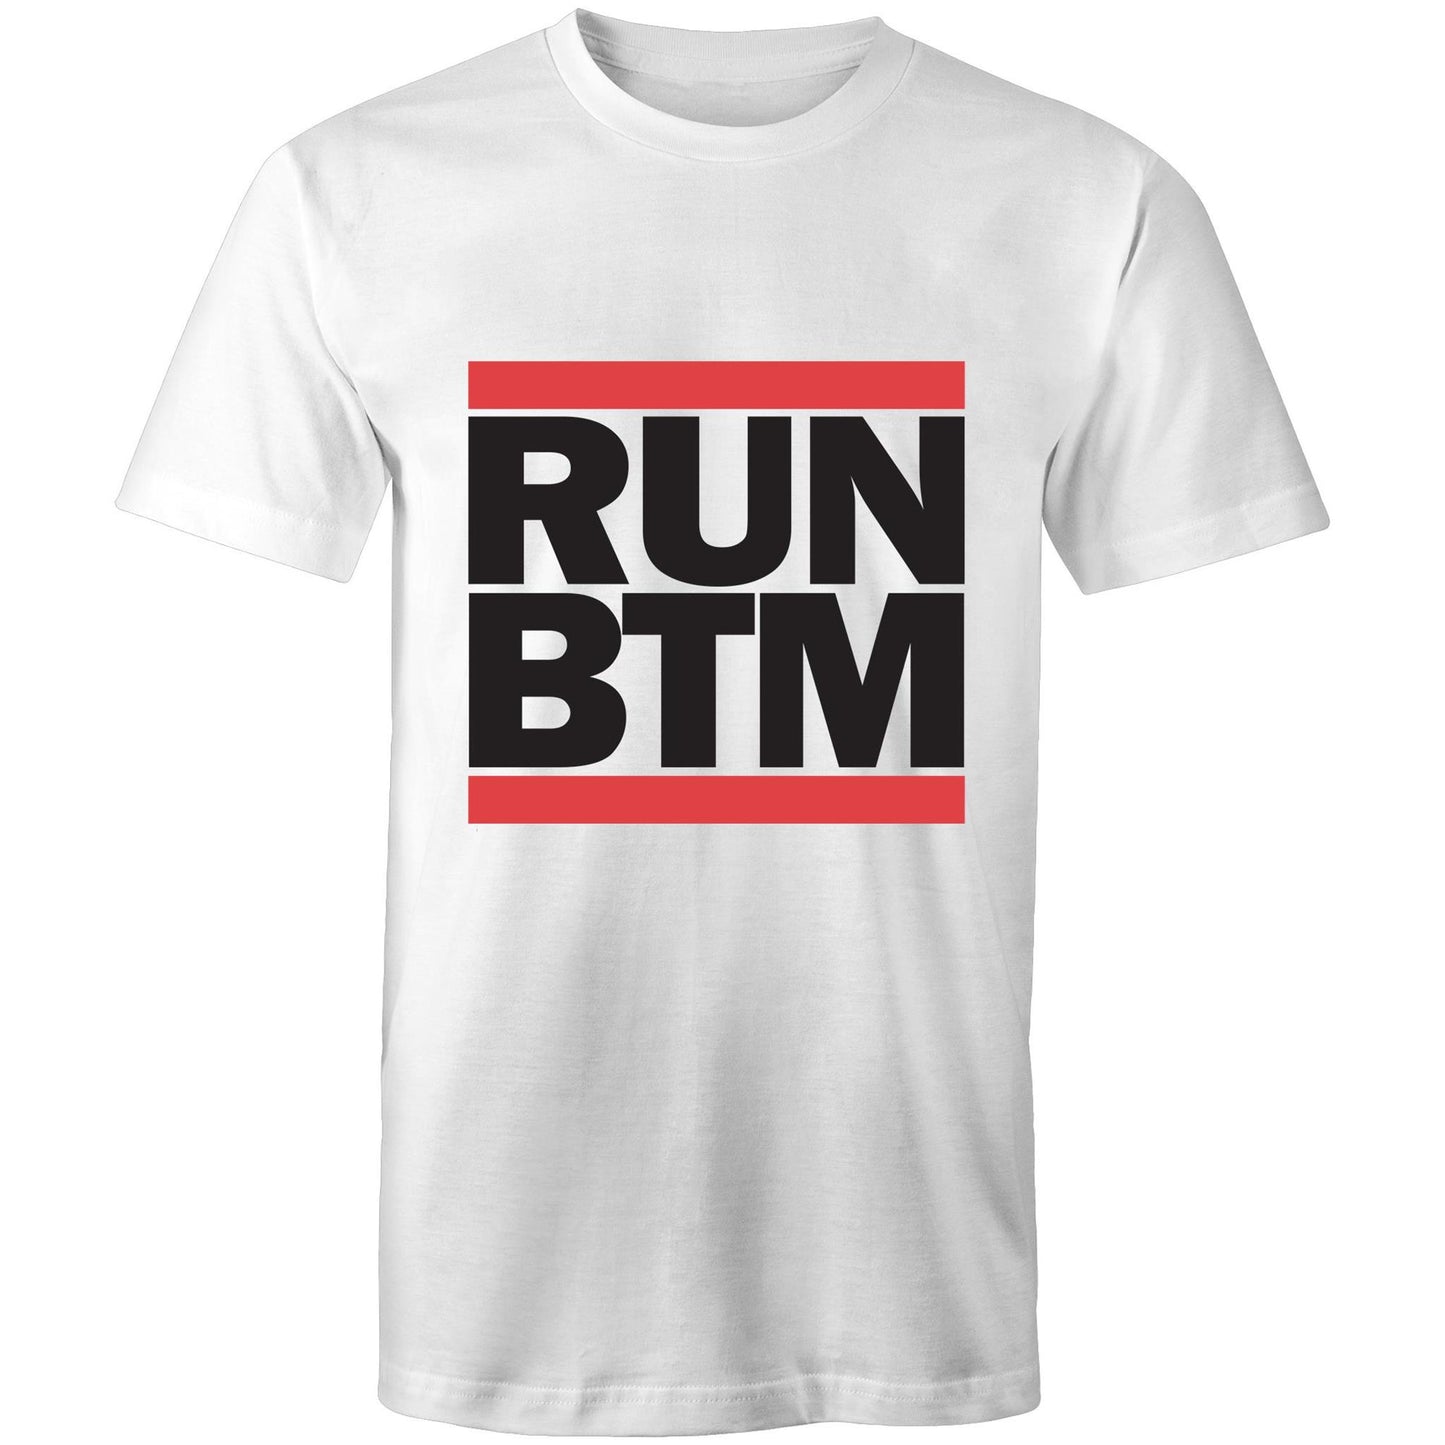 RUN BTM (Black Font) - AS Colour Staple - Mens T-Shirt